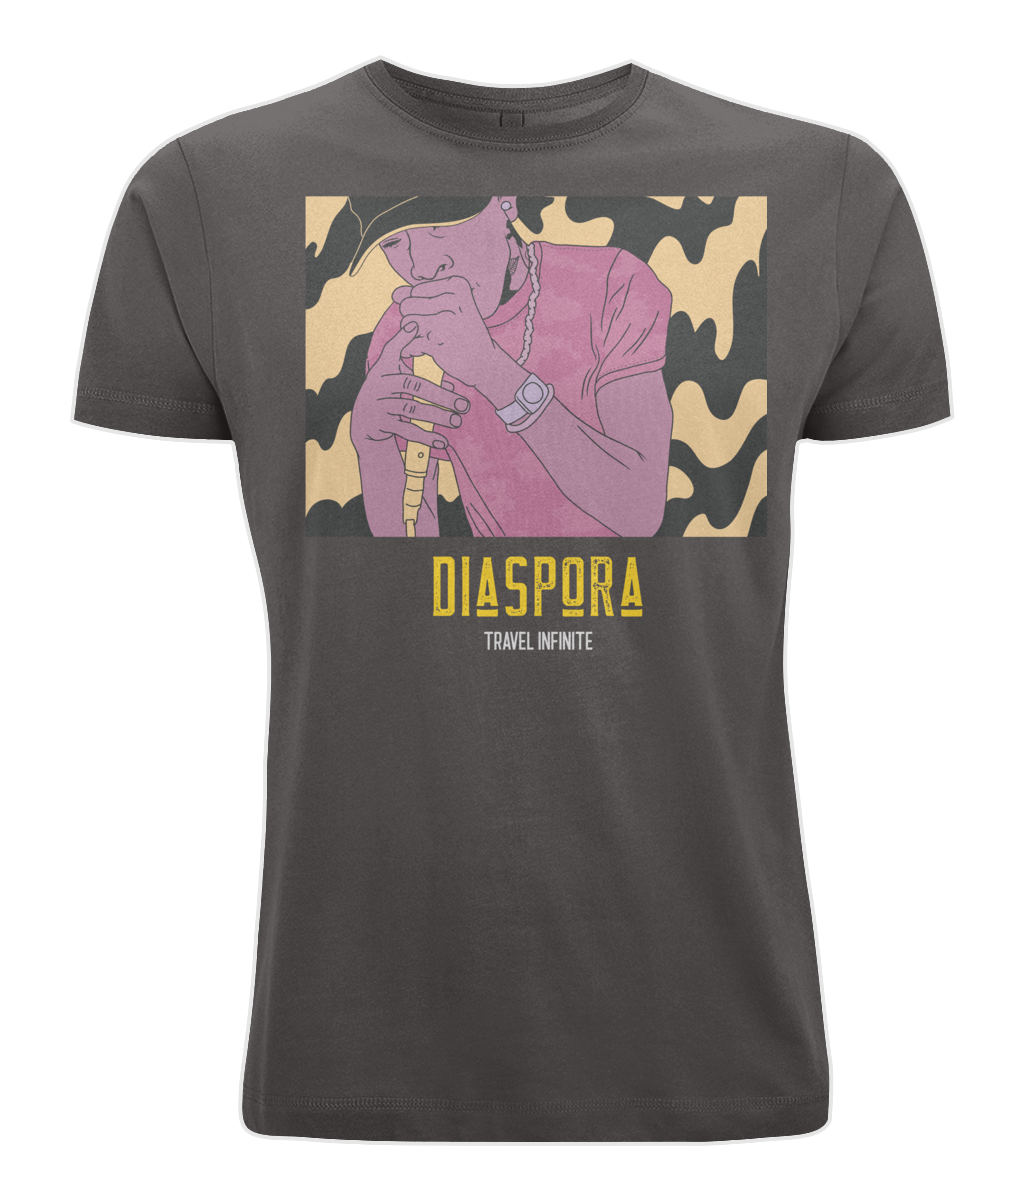 Diaspora T-Shirt - Rapper